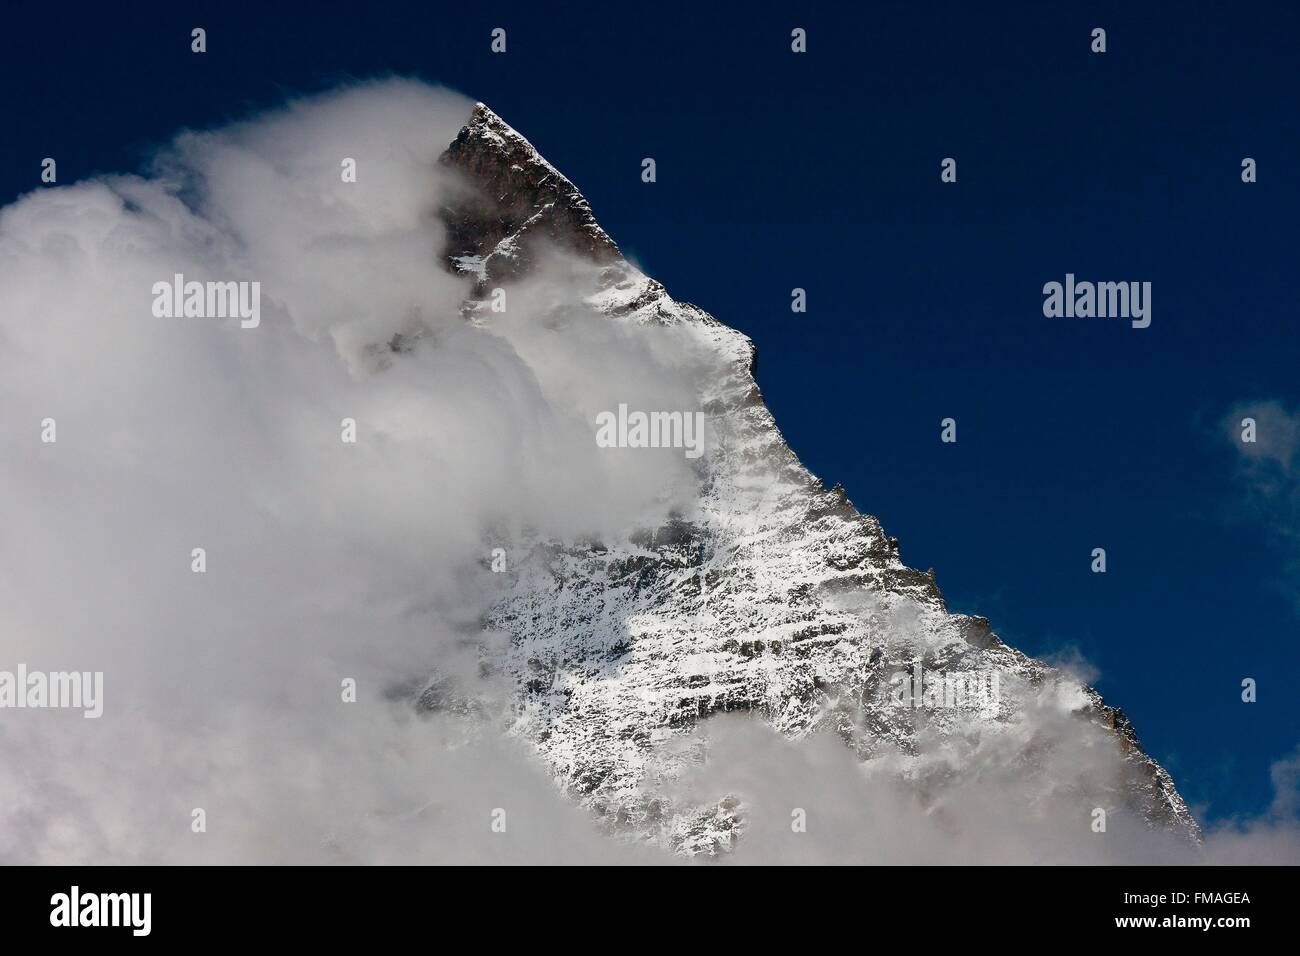 Switzerland, Valais Canton, Zermatt, the Matterhorn (4478 m) Stock Photo